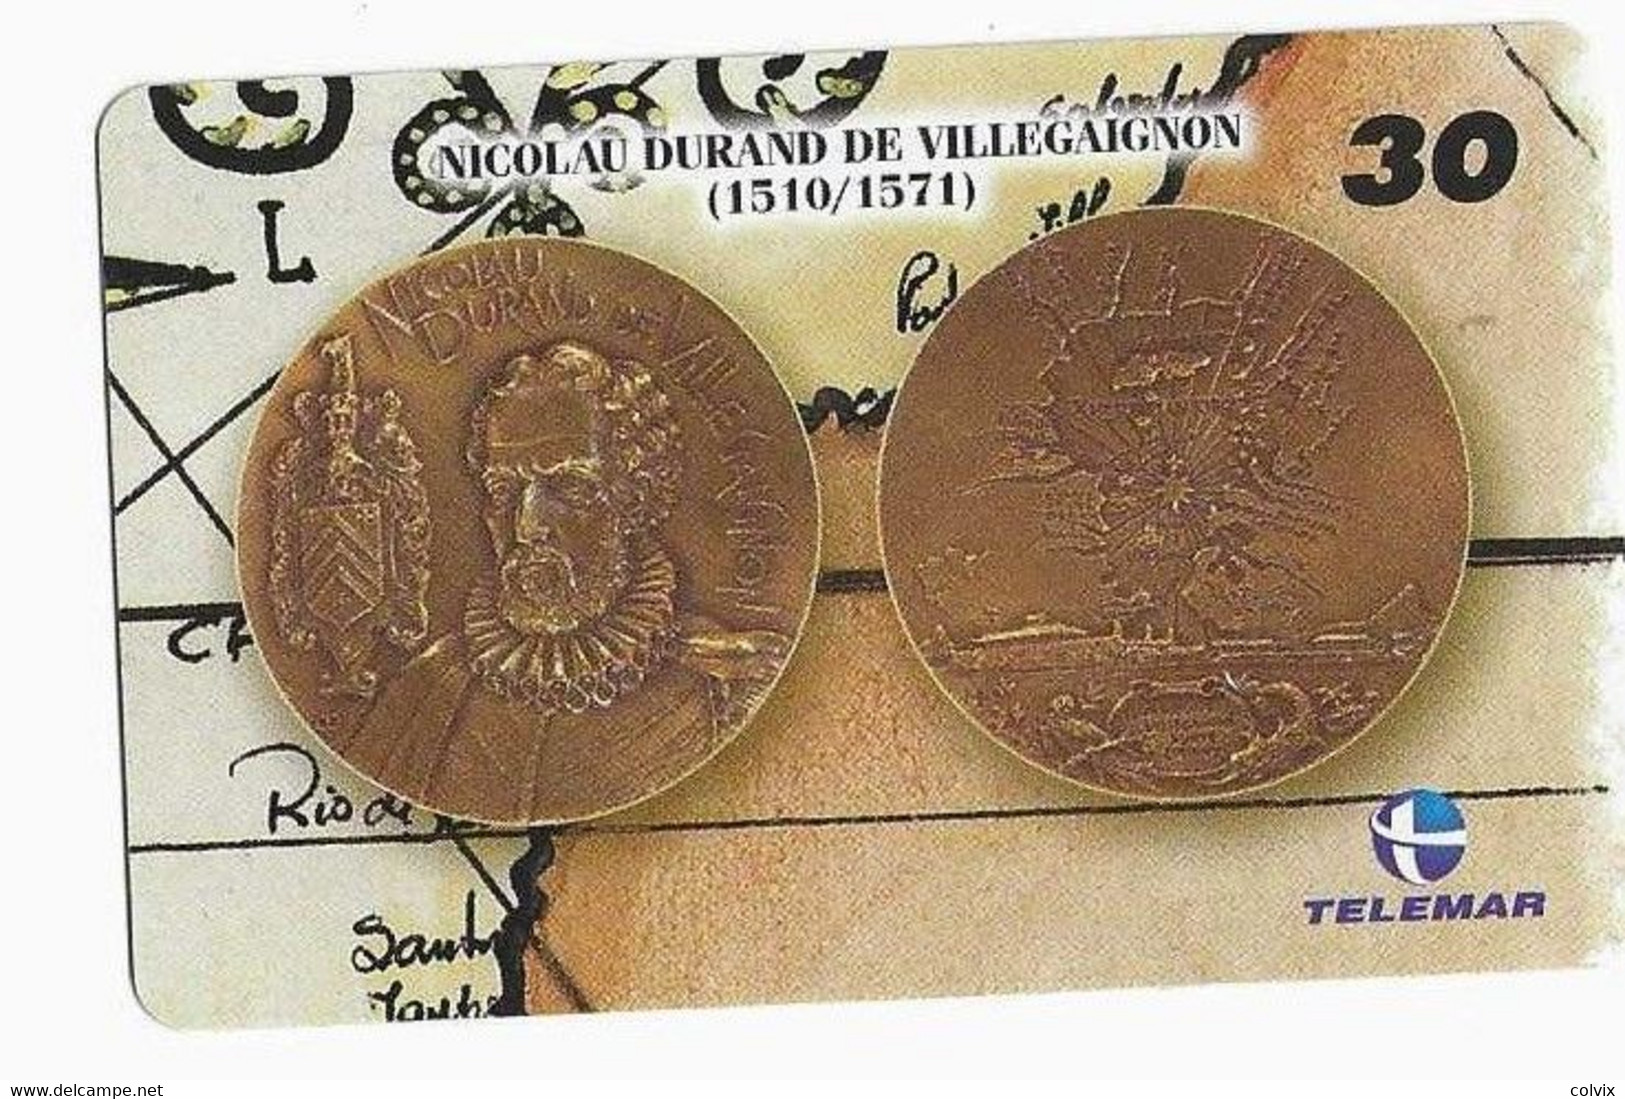 BRESIL TELECARTE MONNAIE NICOLAU DURAND DE VILLEGAIGNON - Briefmarken & Münzen